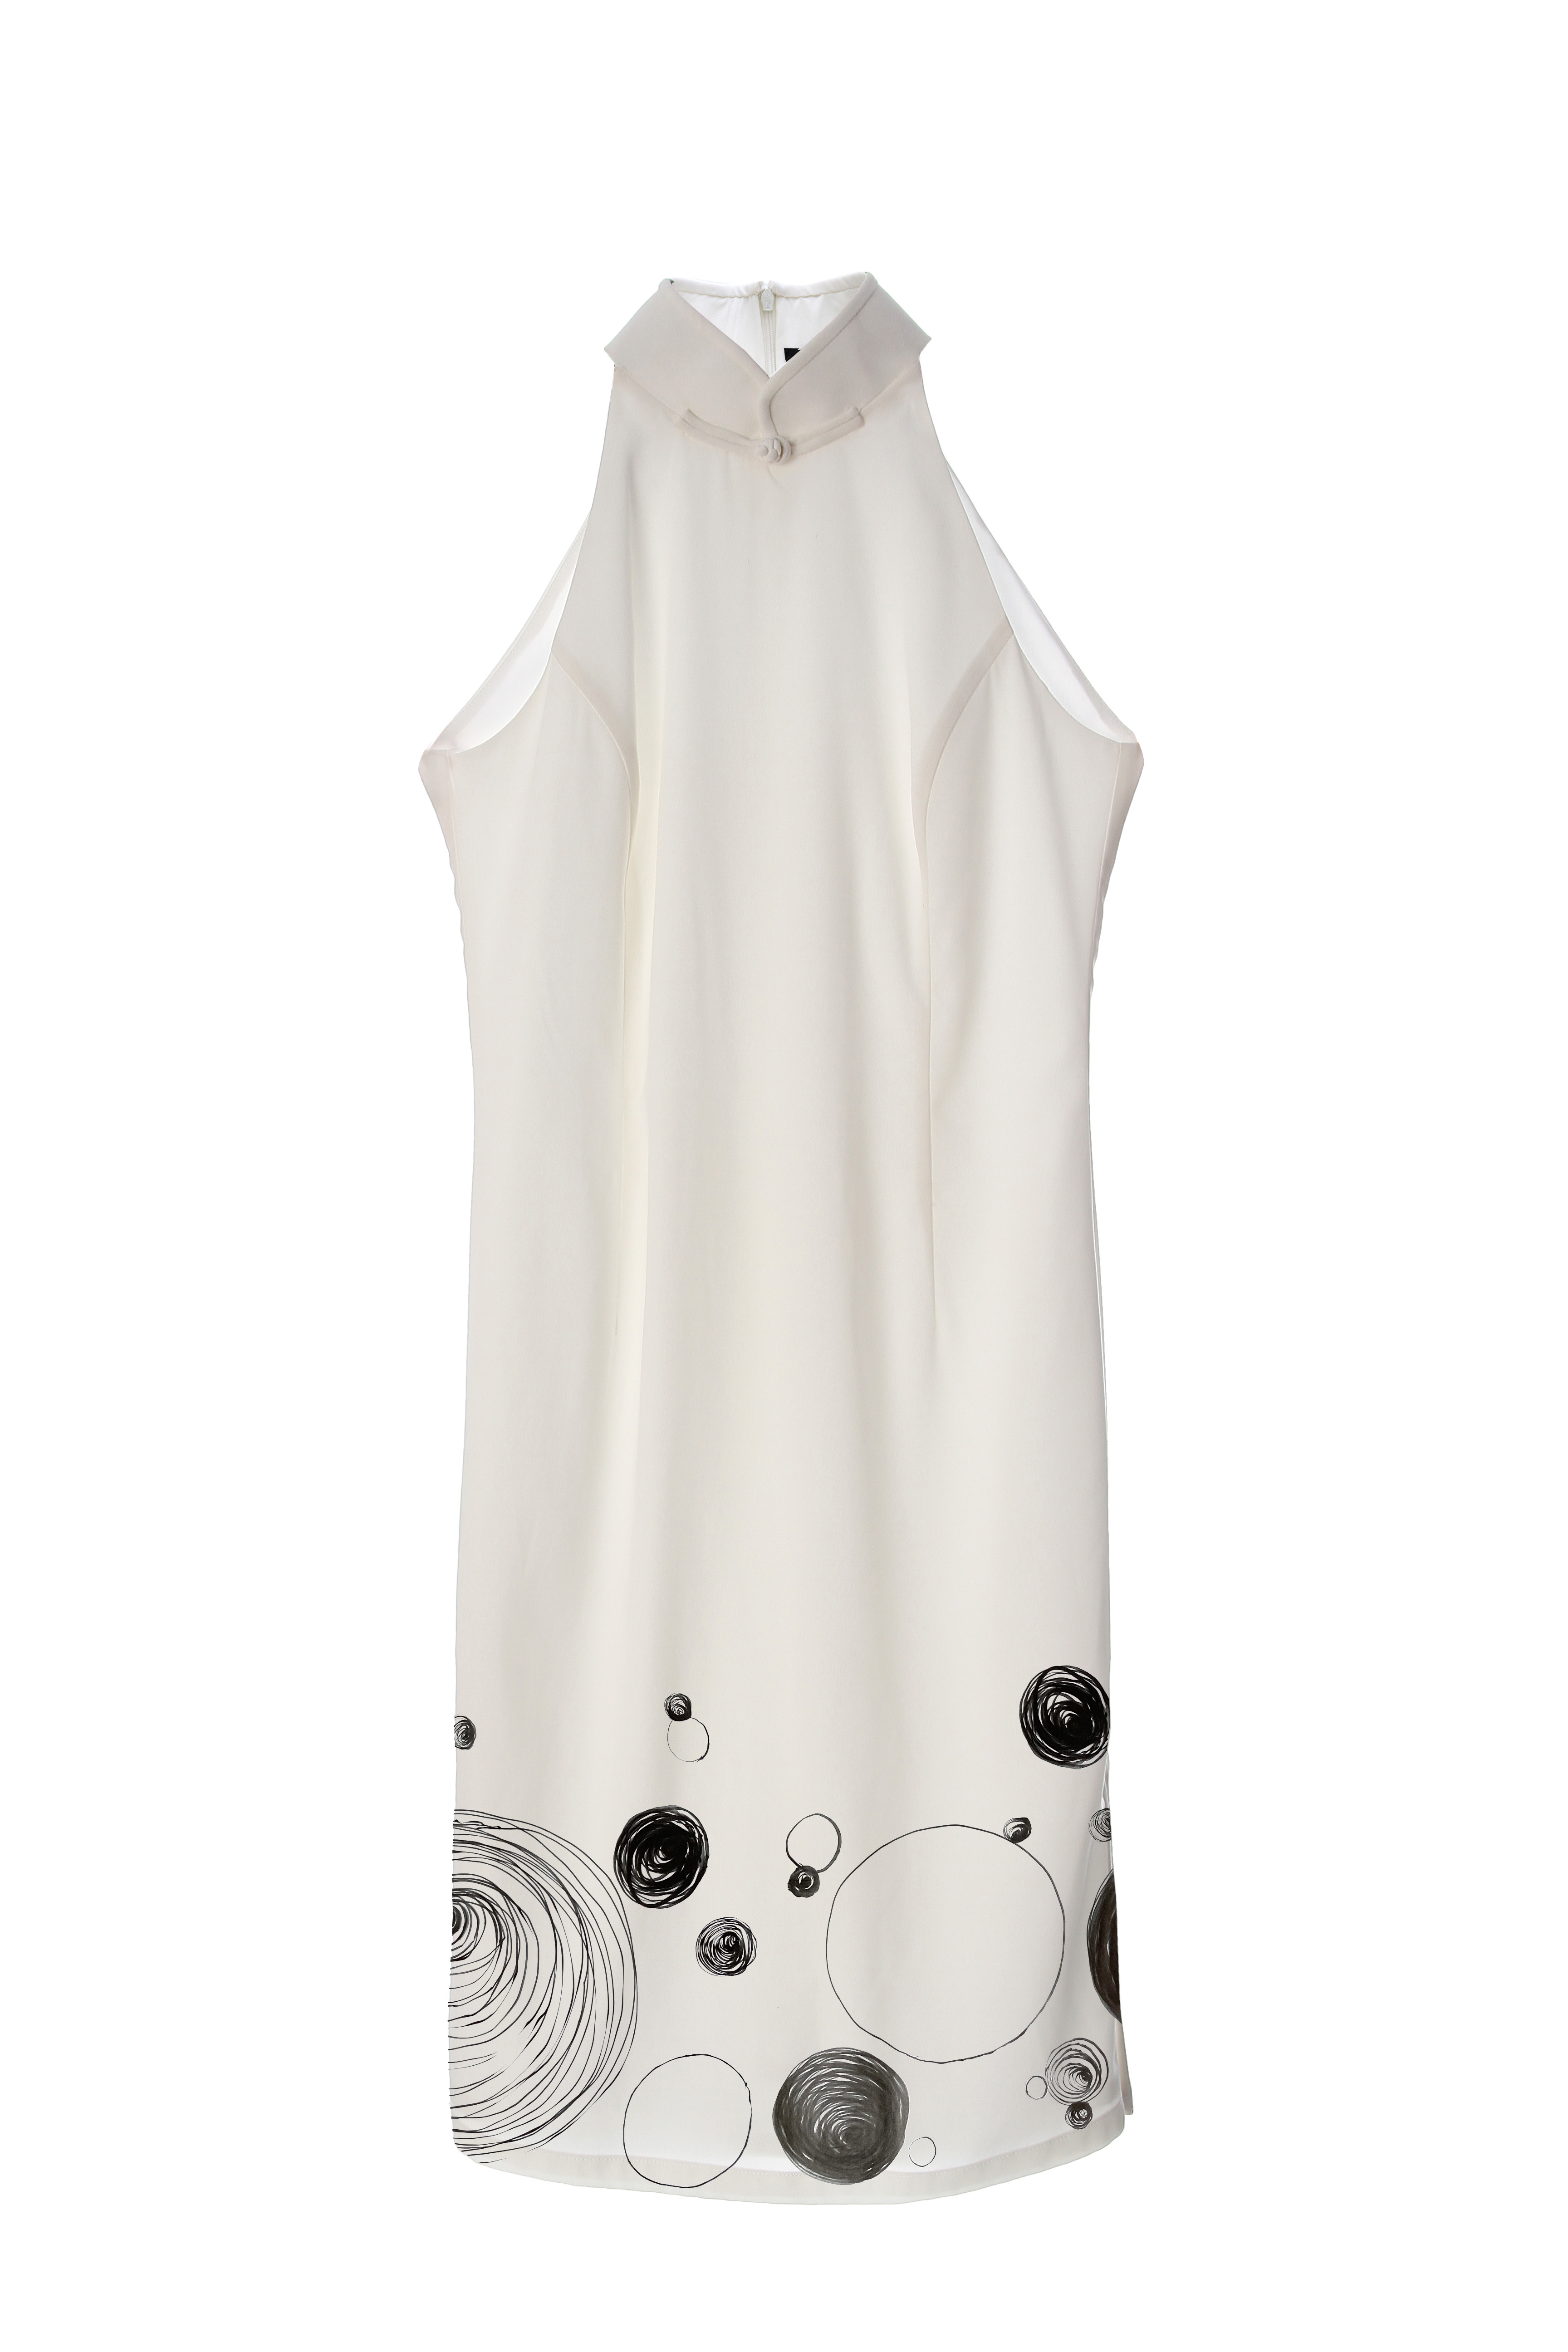 Shuhs 吊带旗袍-12个回收水瓶-白色｜Shuhs Halter Qipao - 12 Recycled Water Bottles - White